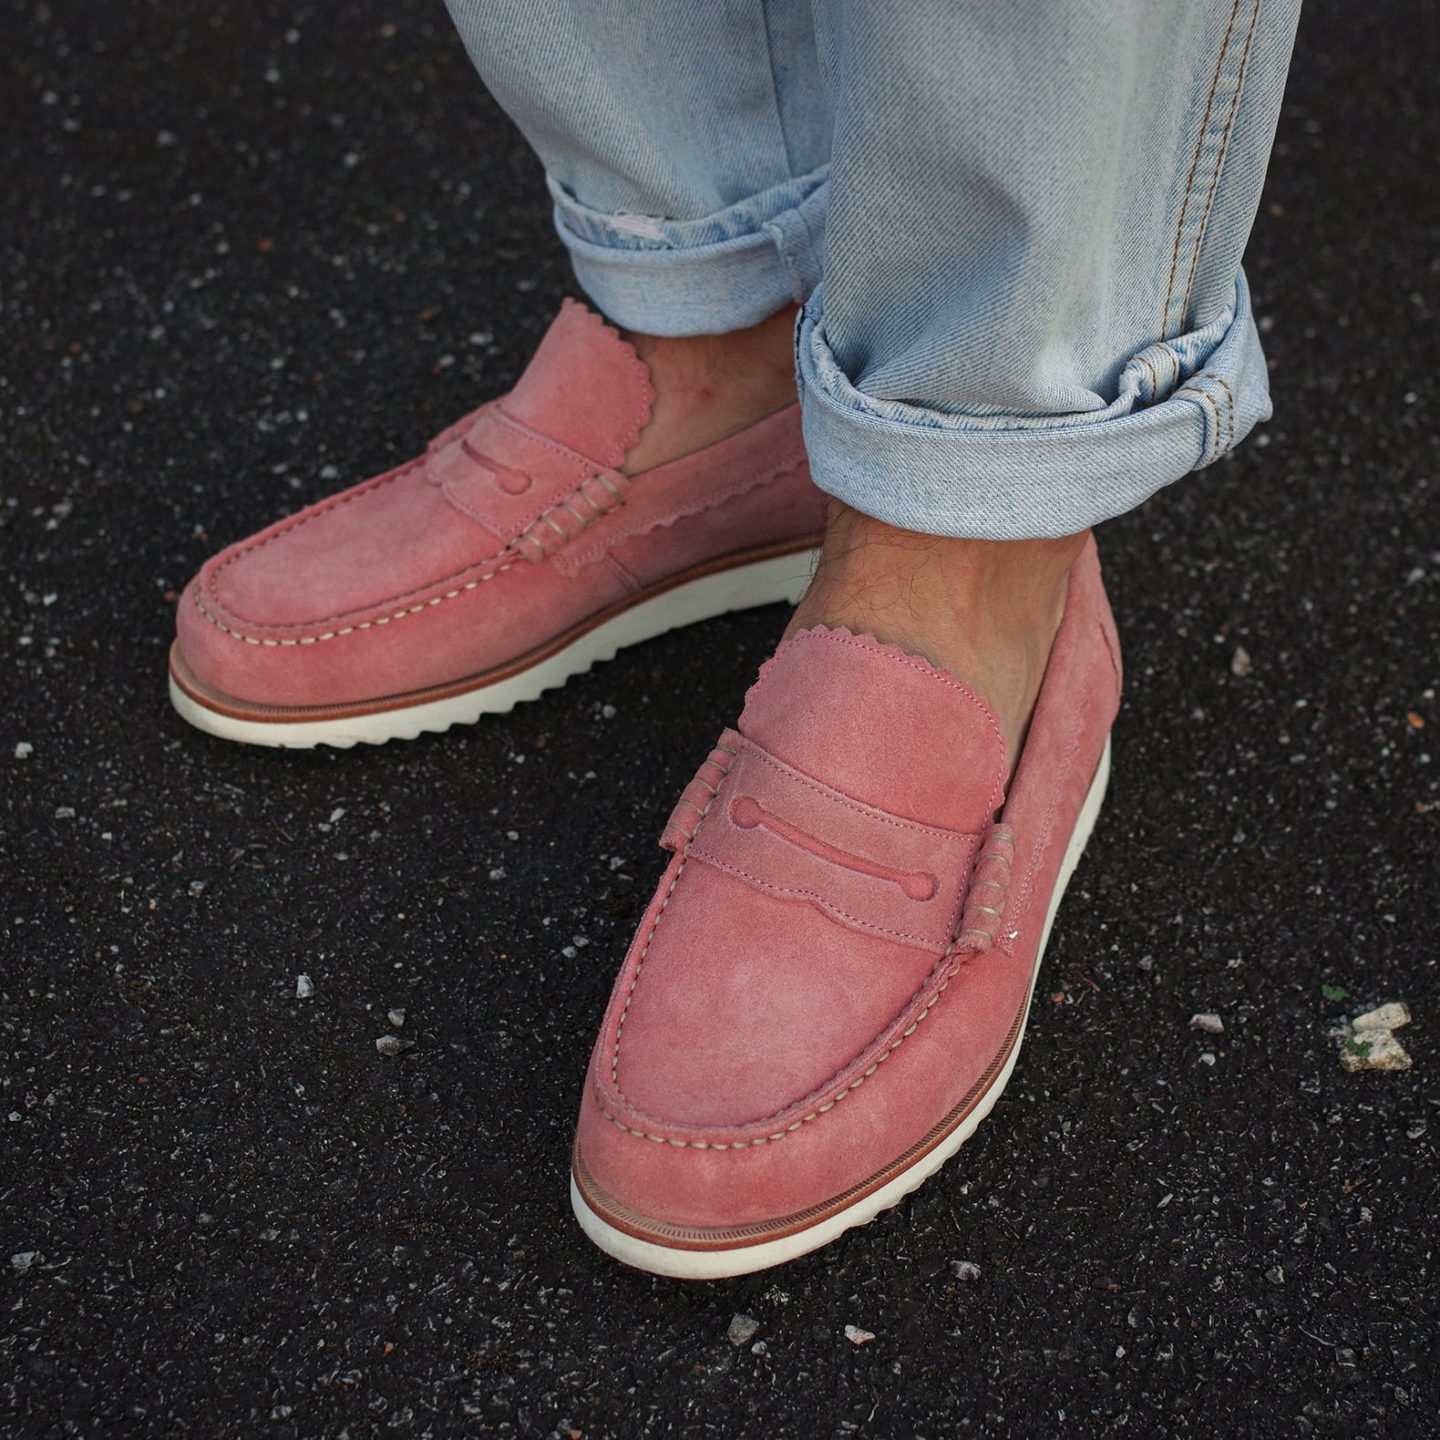 mocassins roses de la marque Grenson, forme penny loafers